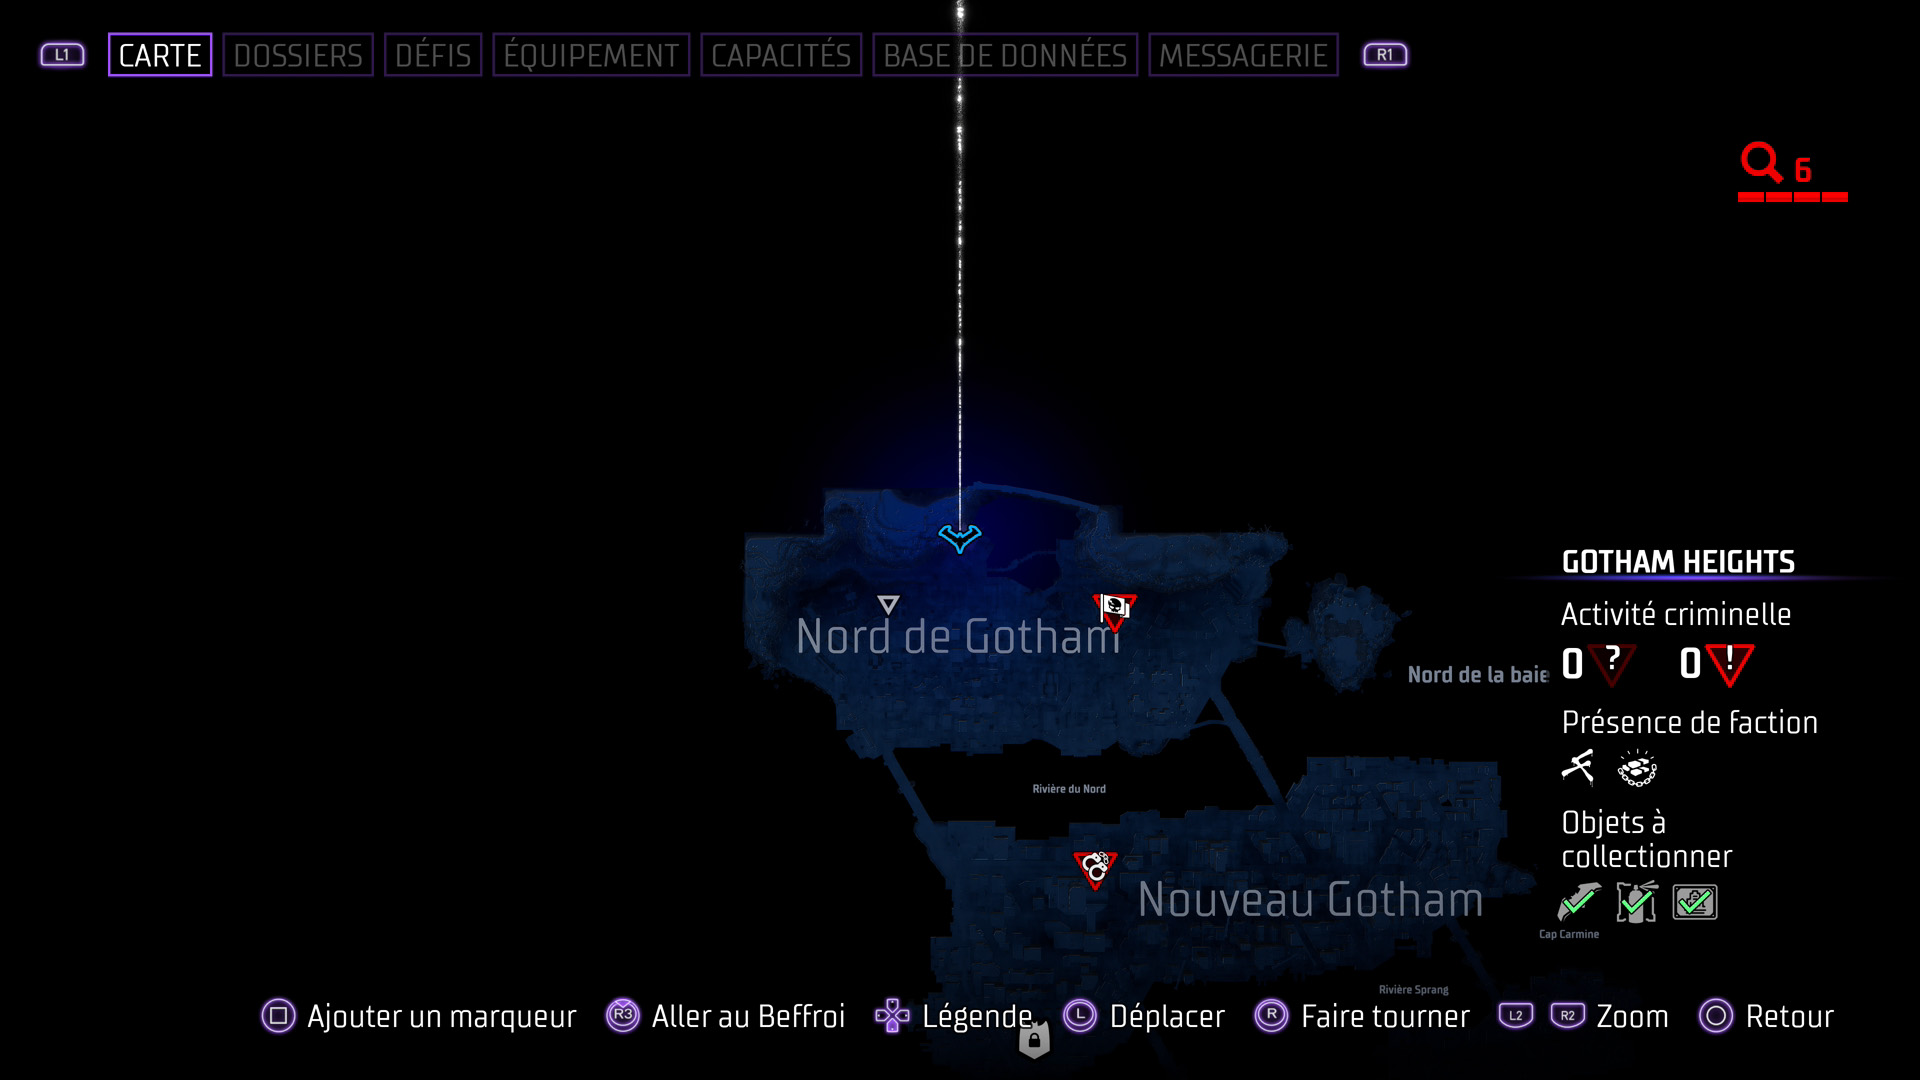 Les batarangs - nord de gotham - gotham heights - réservoir - gotham knights